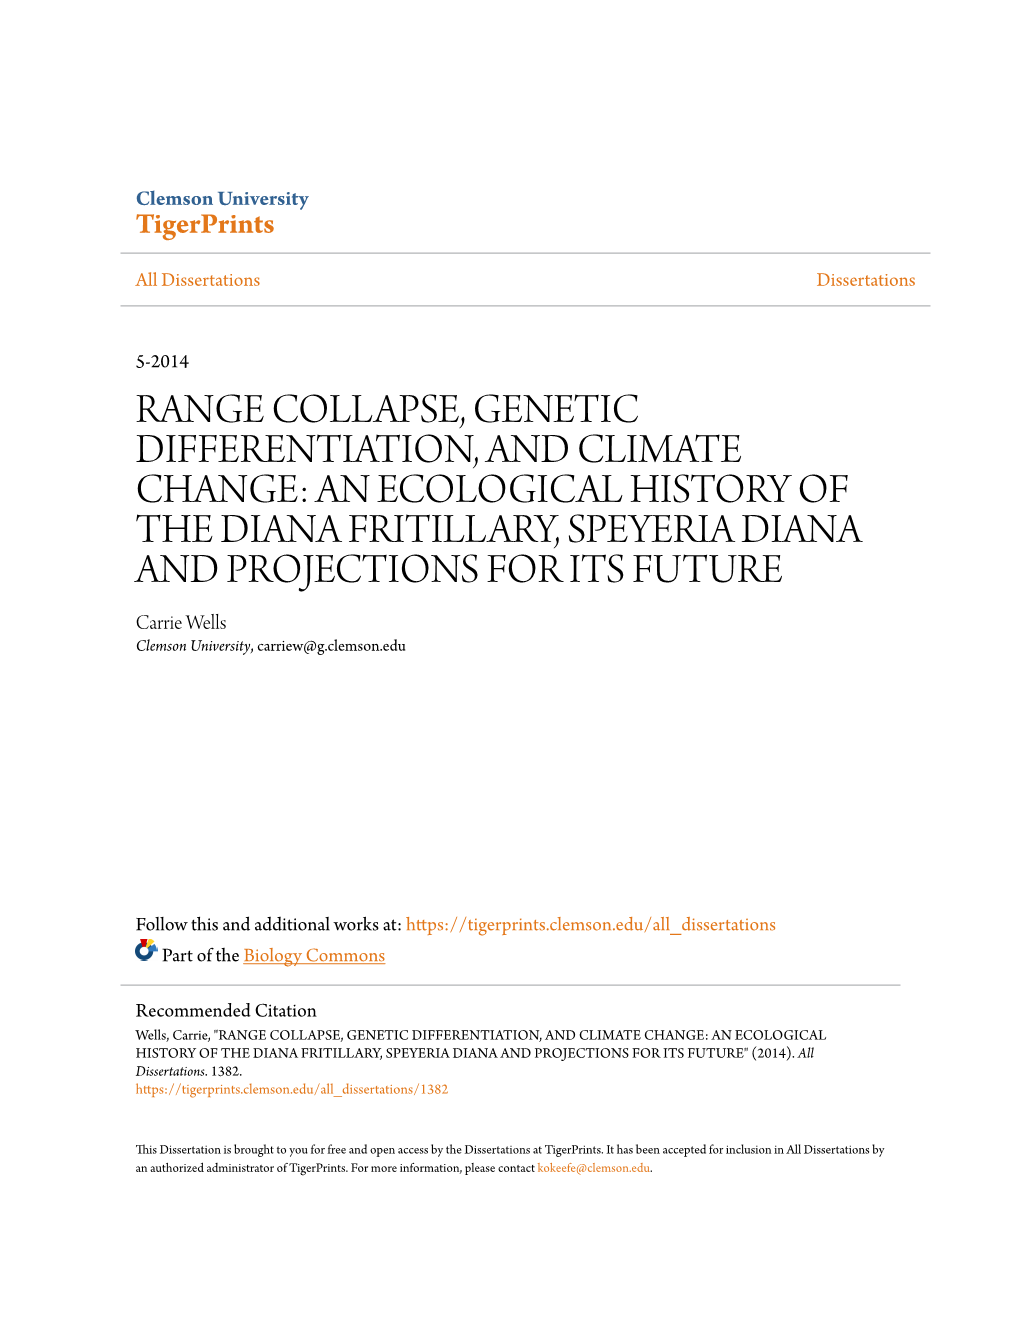 Range Collapse, Genetic Differentiation